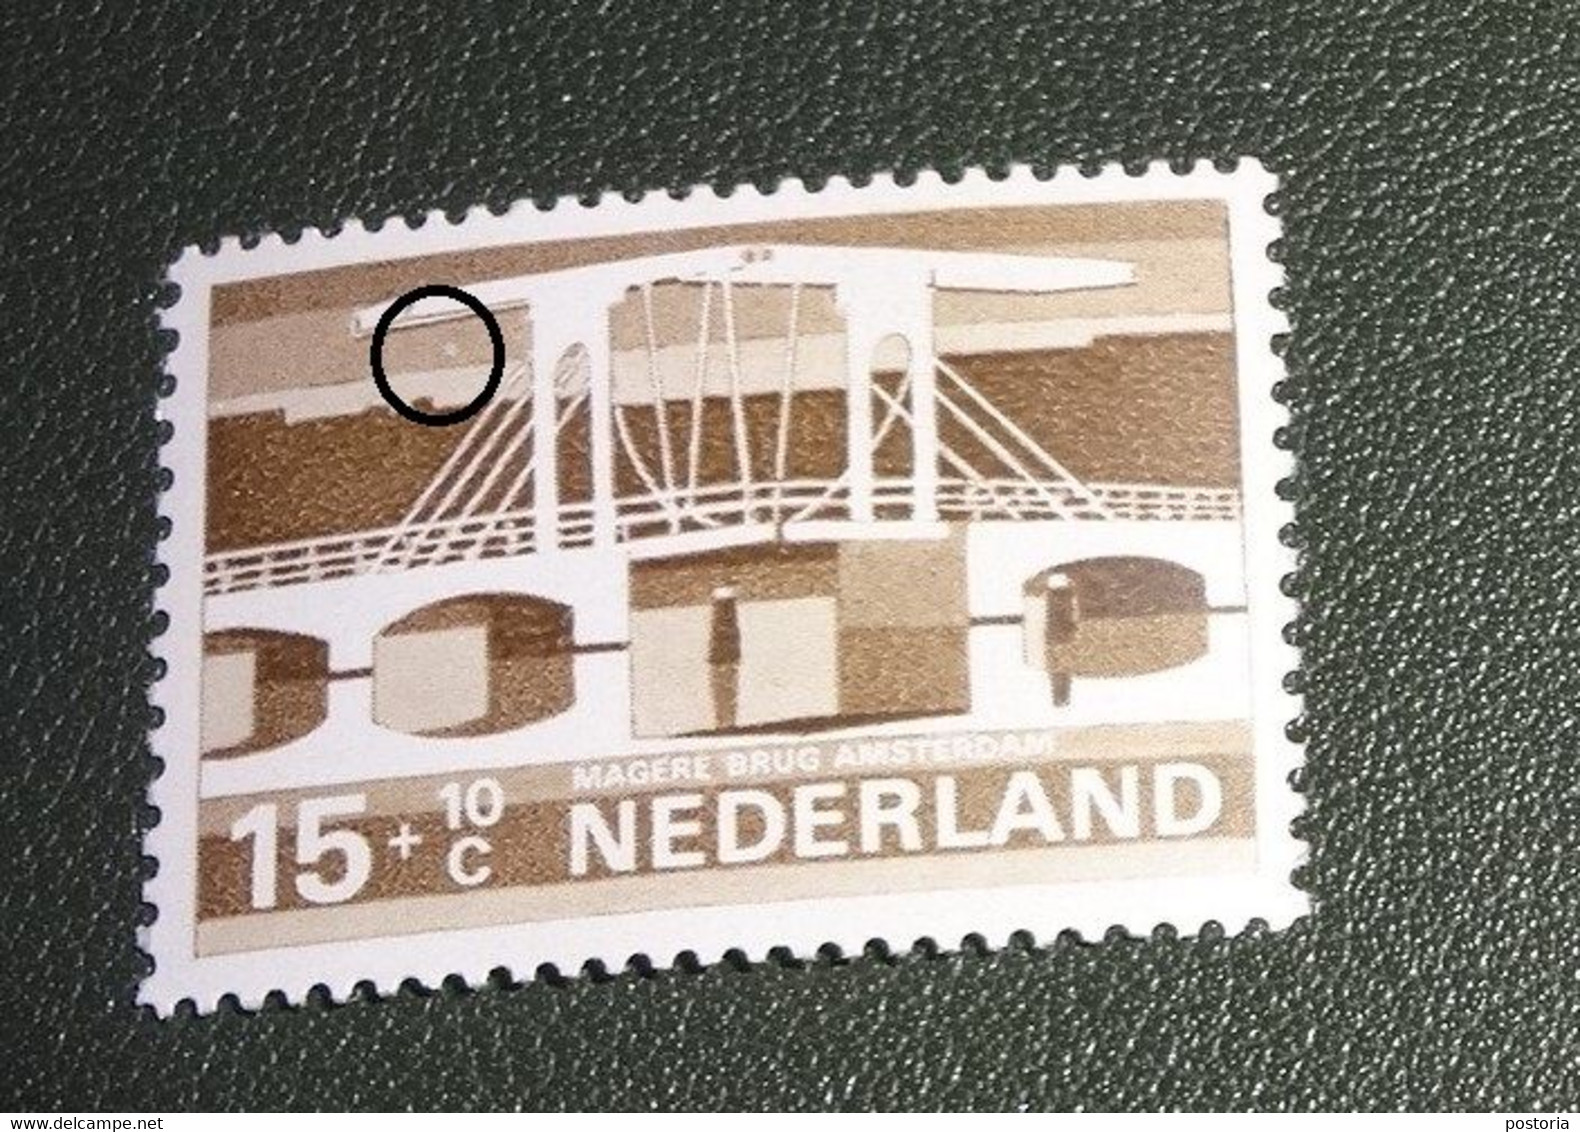 Nederland - MAST - 902 PM - 1968 - Plaatfout - Postfris - Wit Vlekje Onder Ophaalgewicht - Errors & Oddities